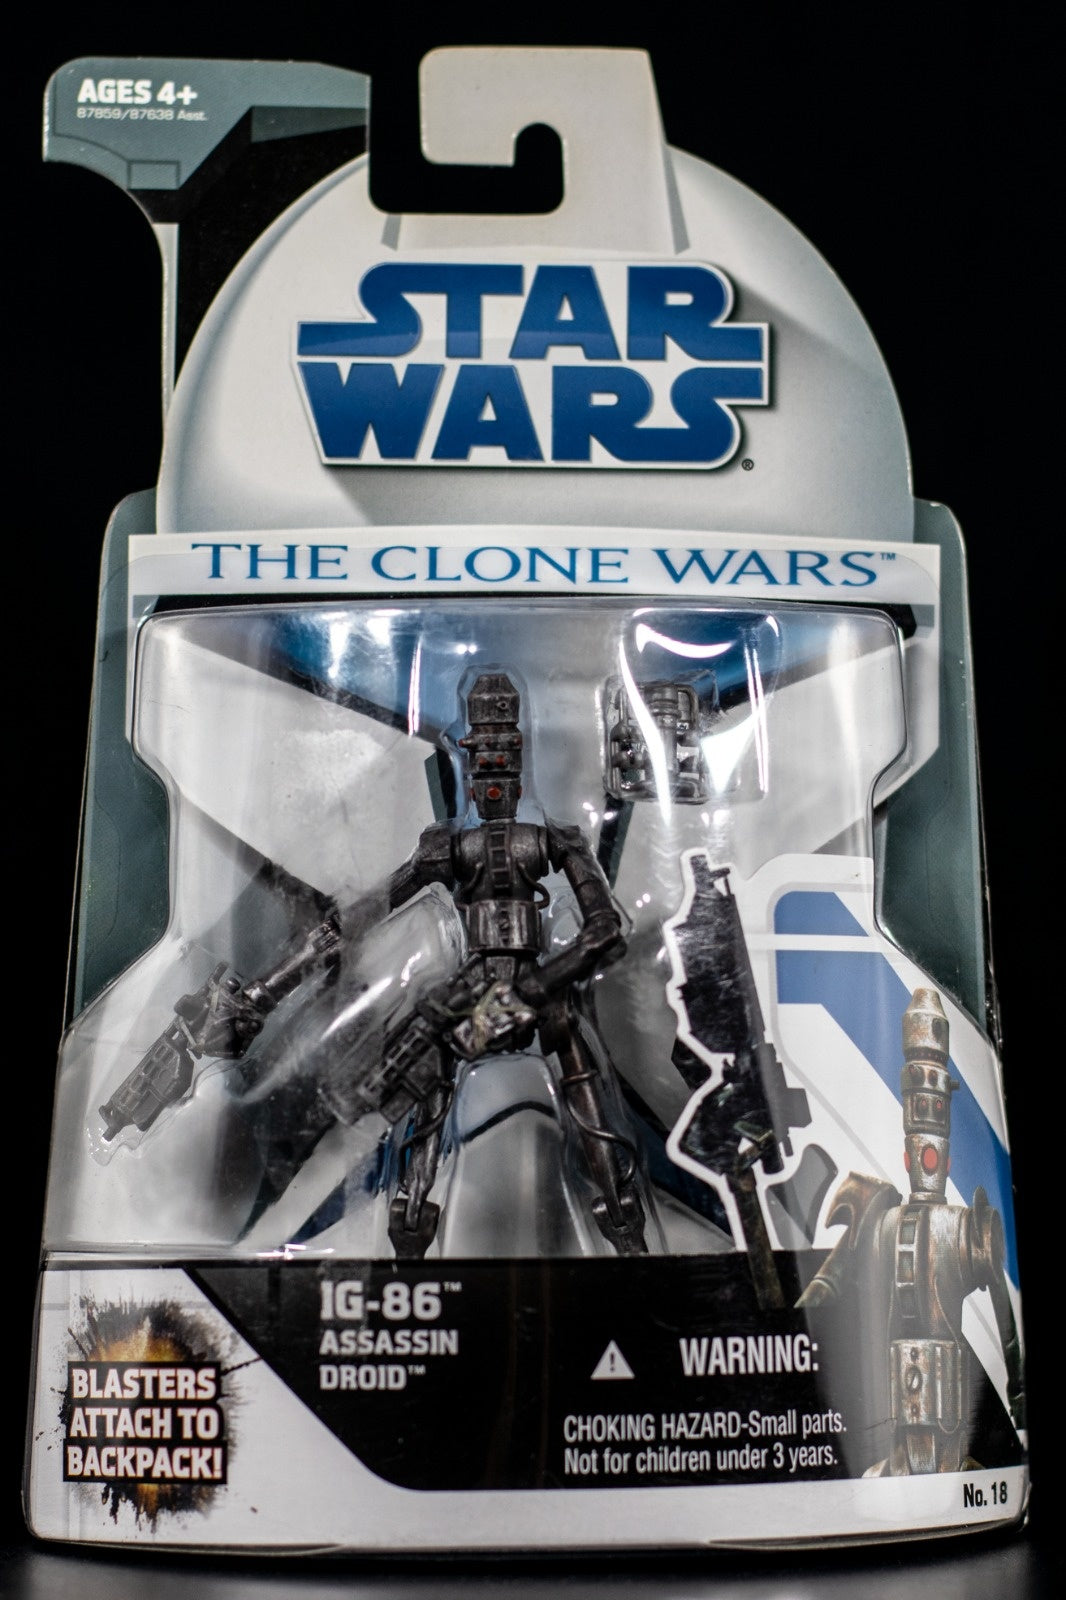 Star Wars: The Clone Wars "IG-86 Assassin Droid"